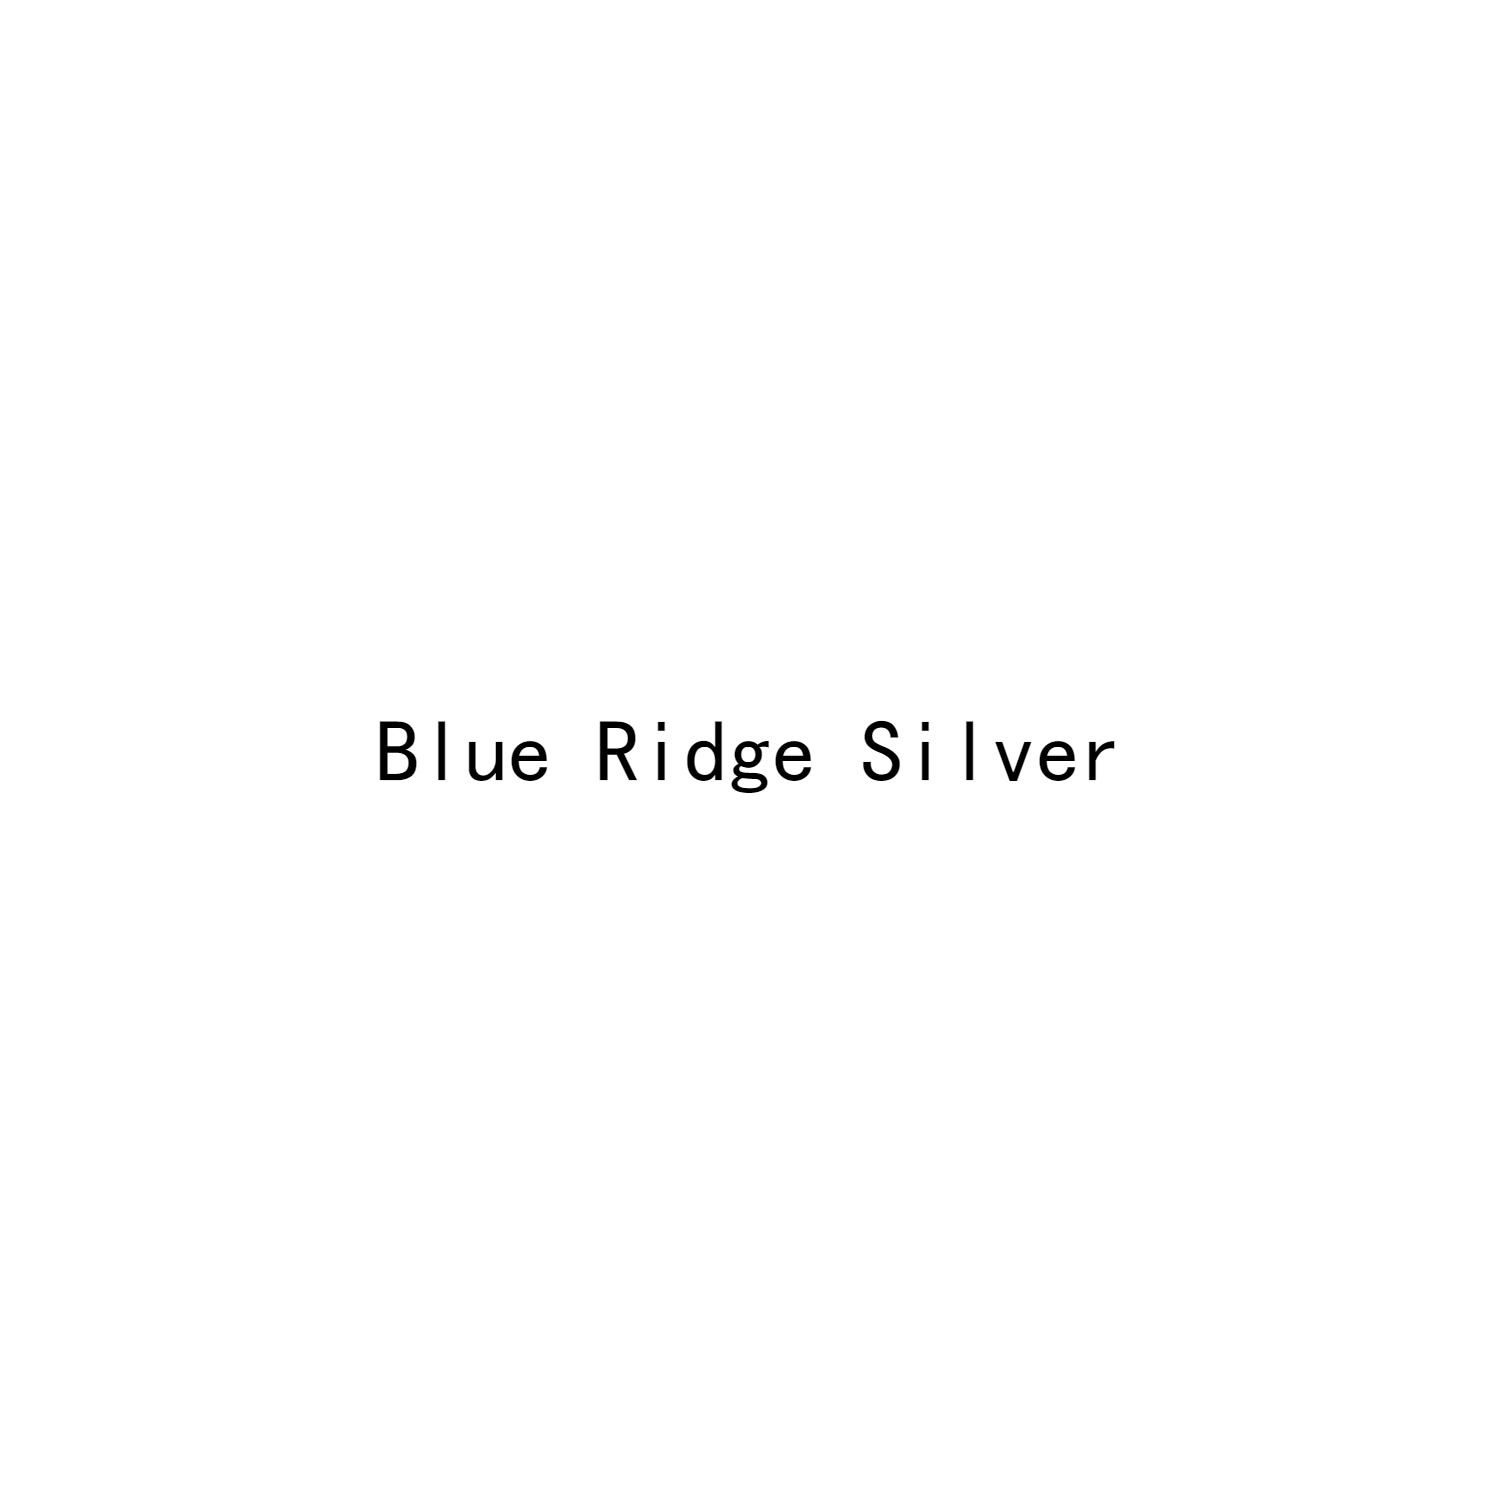 BLUE RIDGE SILVER